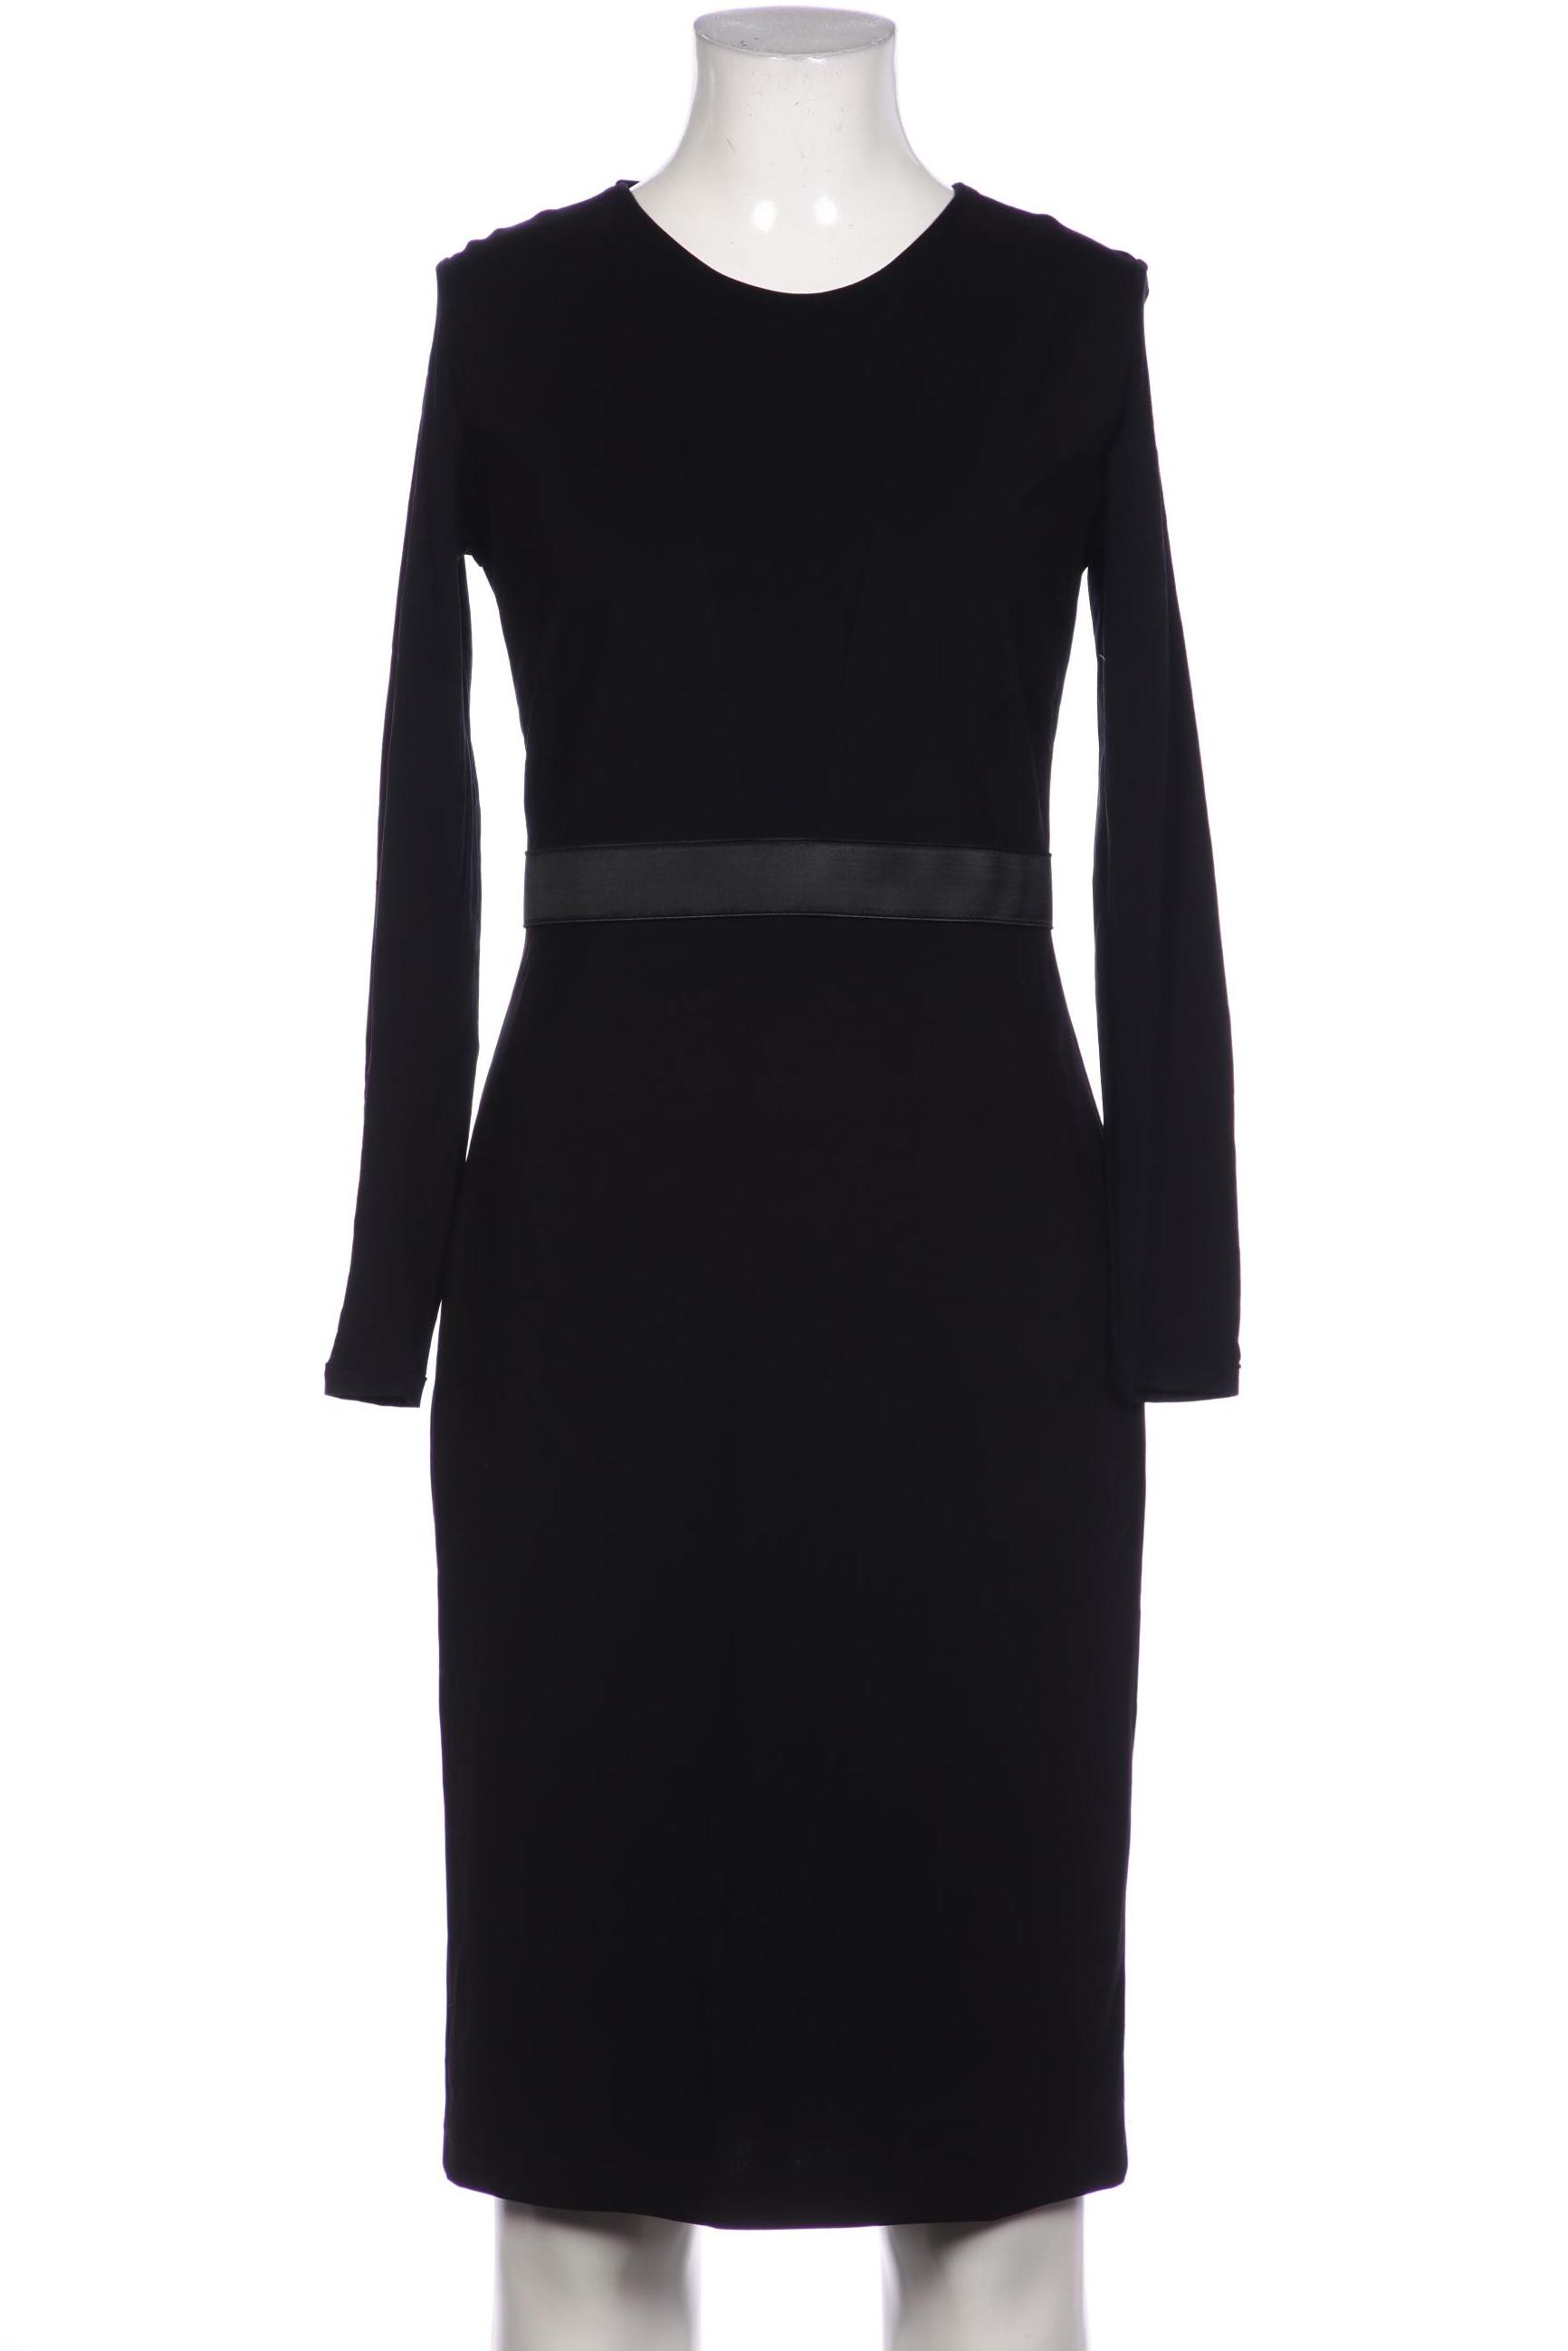 Rene Lezard Damen Kleid, schwarz von Rene Lezard